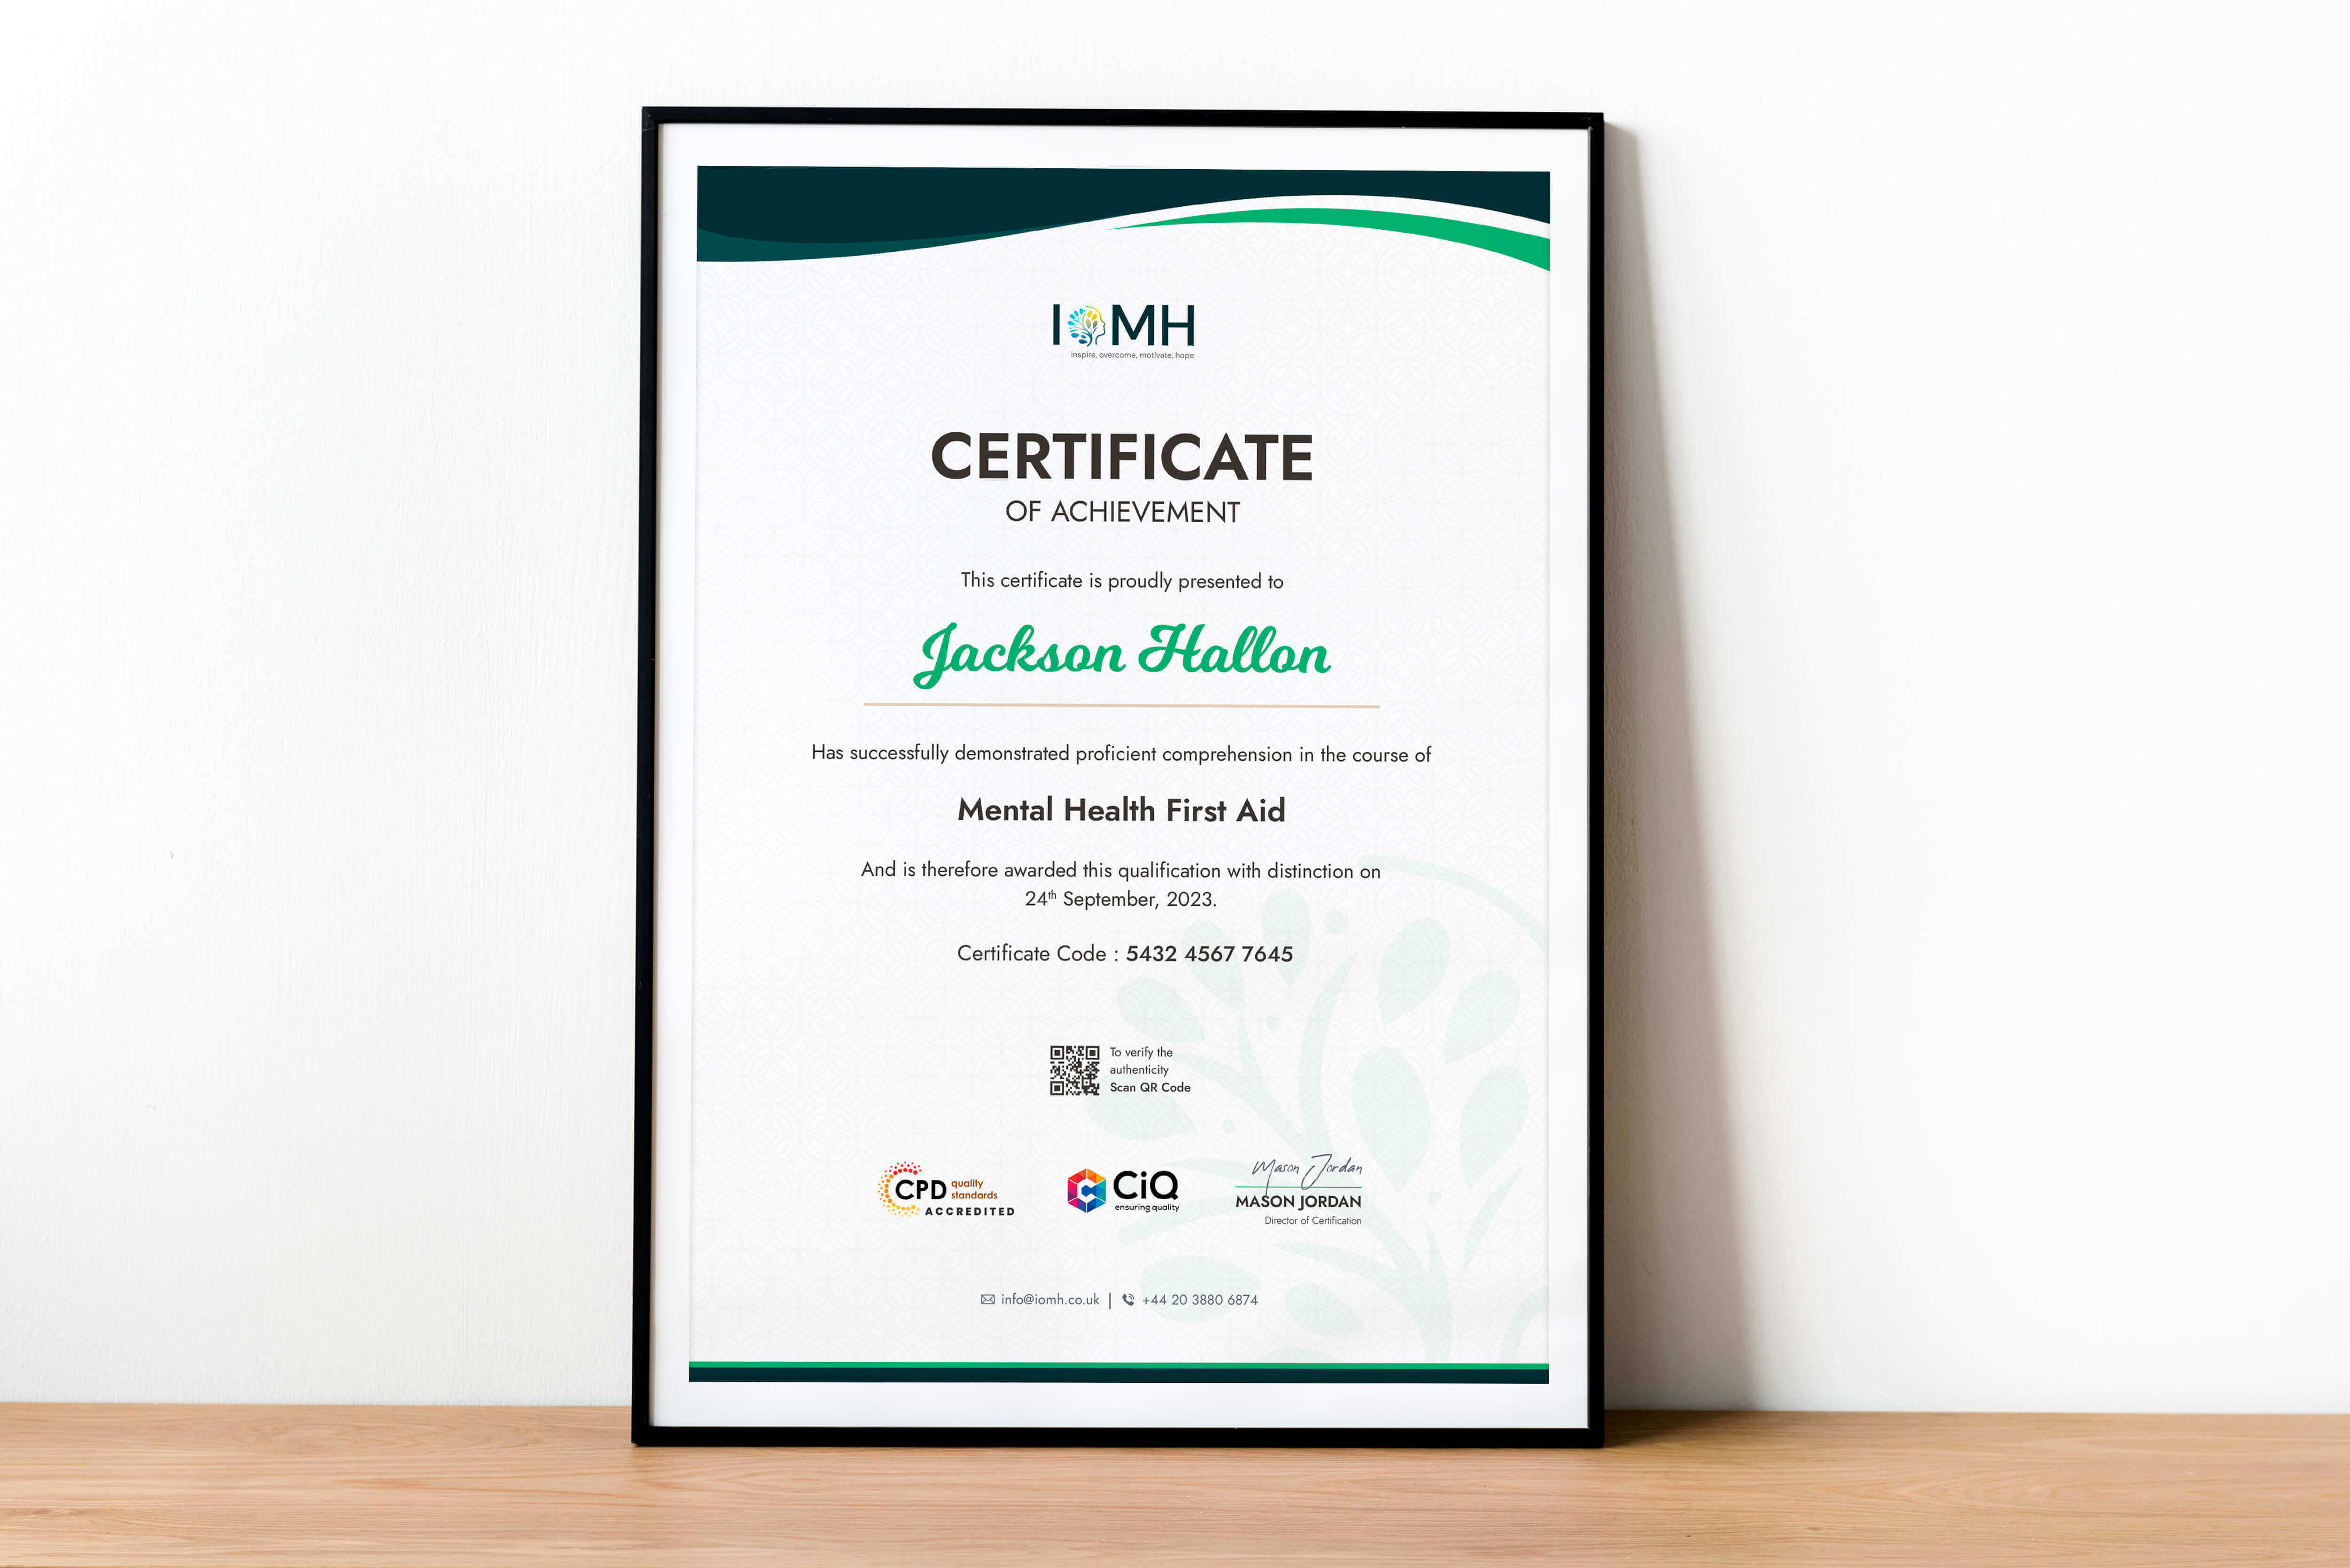 IOMH - Institute of Mental Health sample certificate